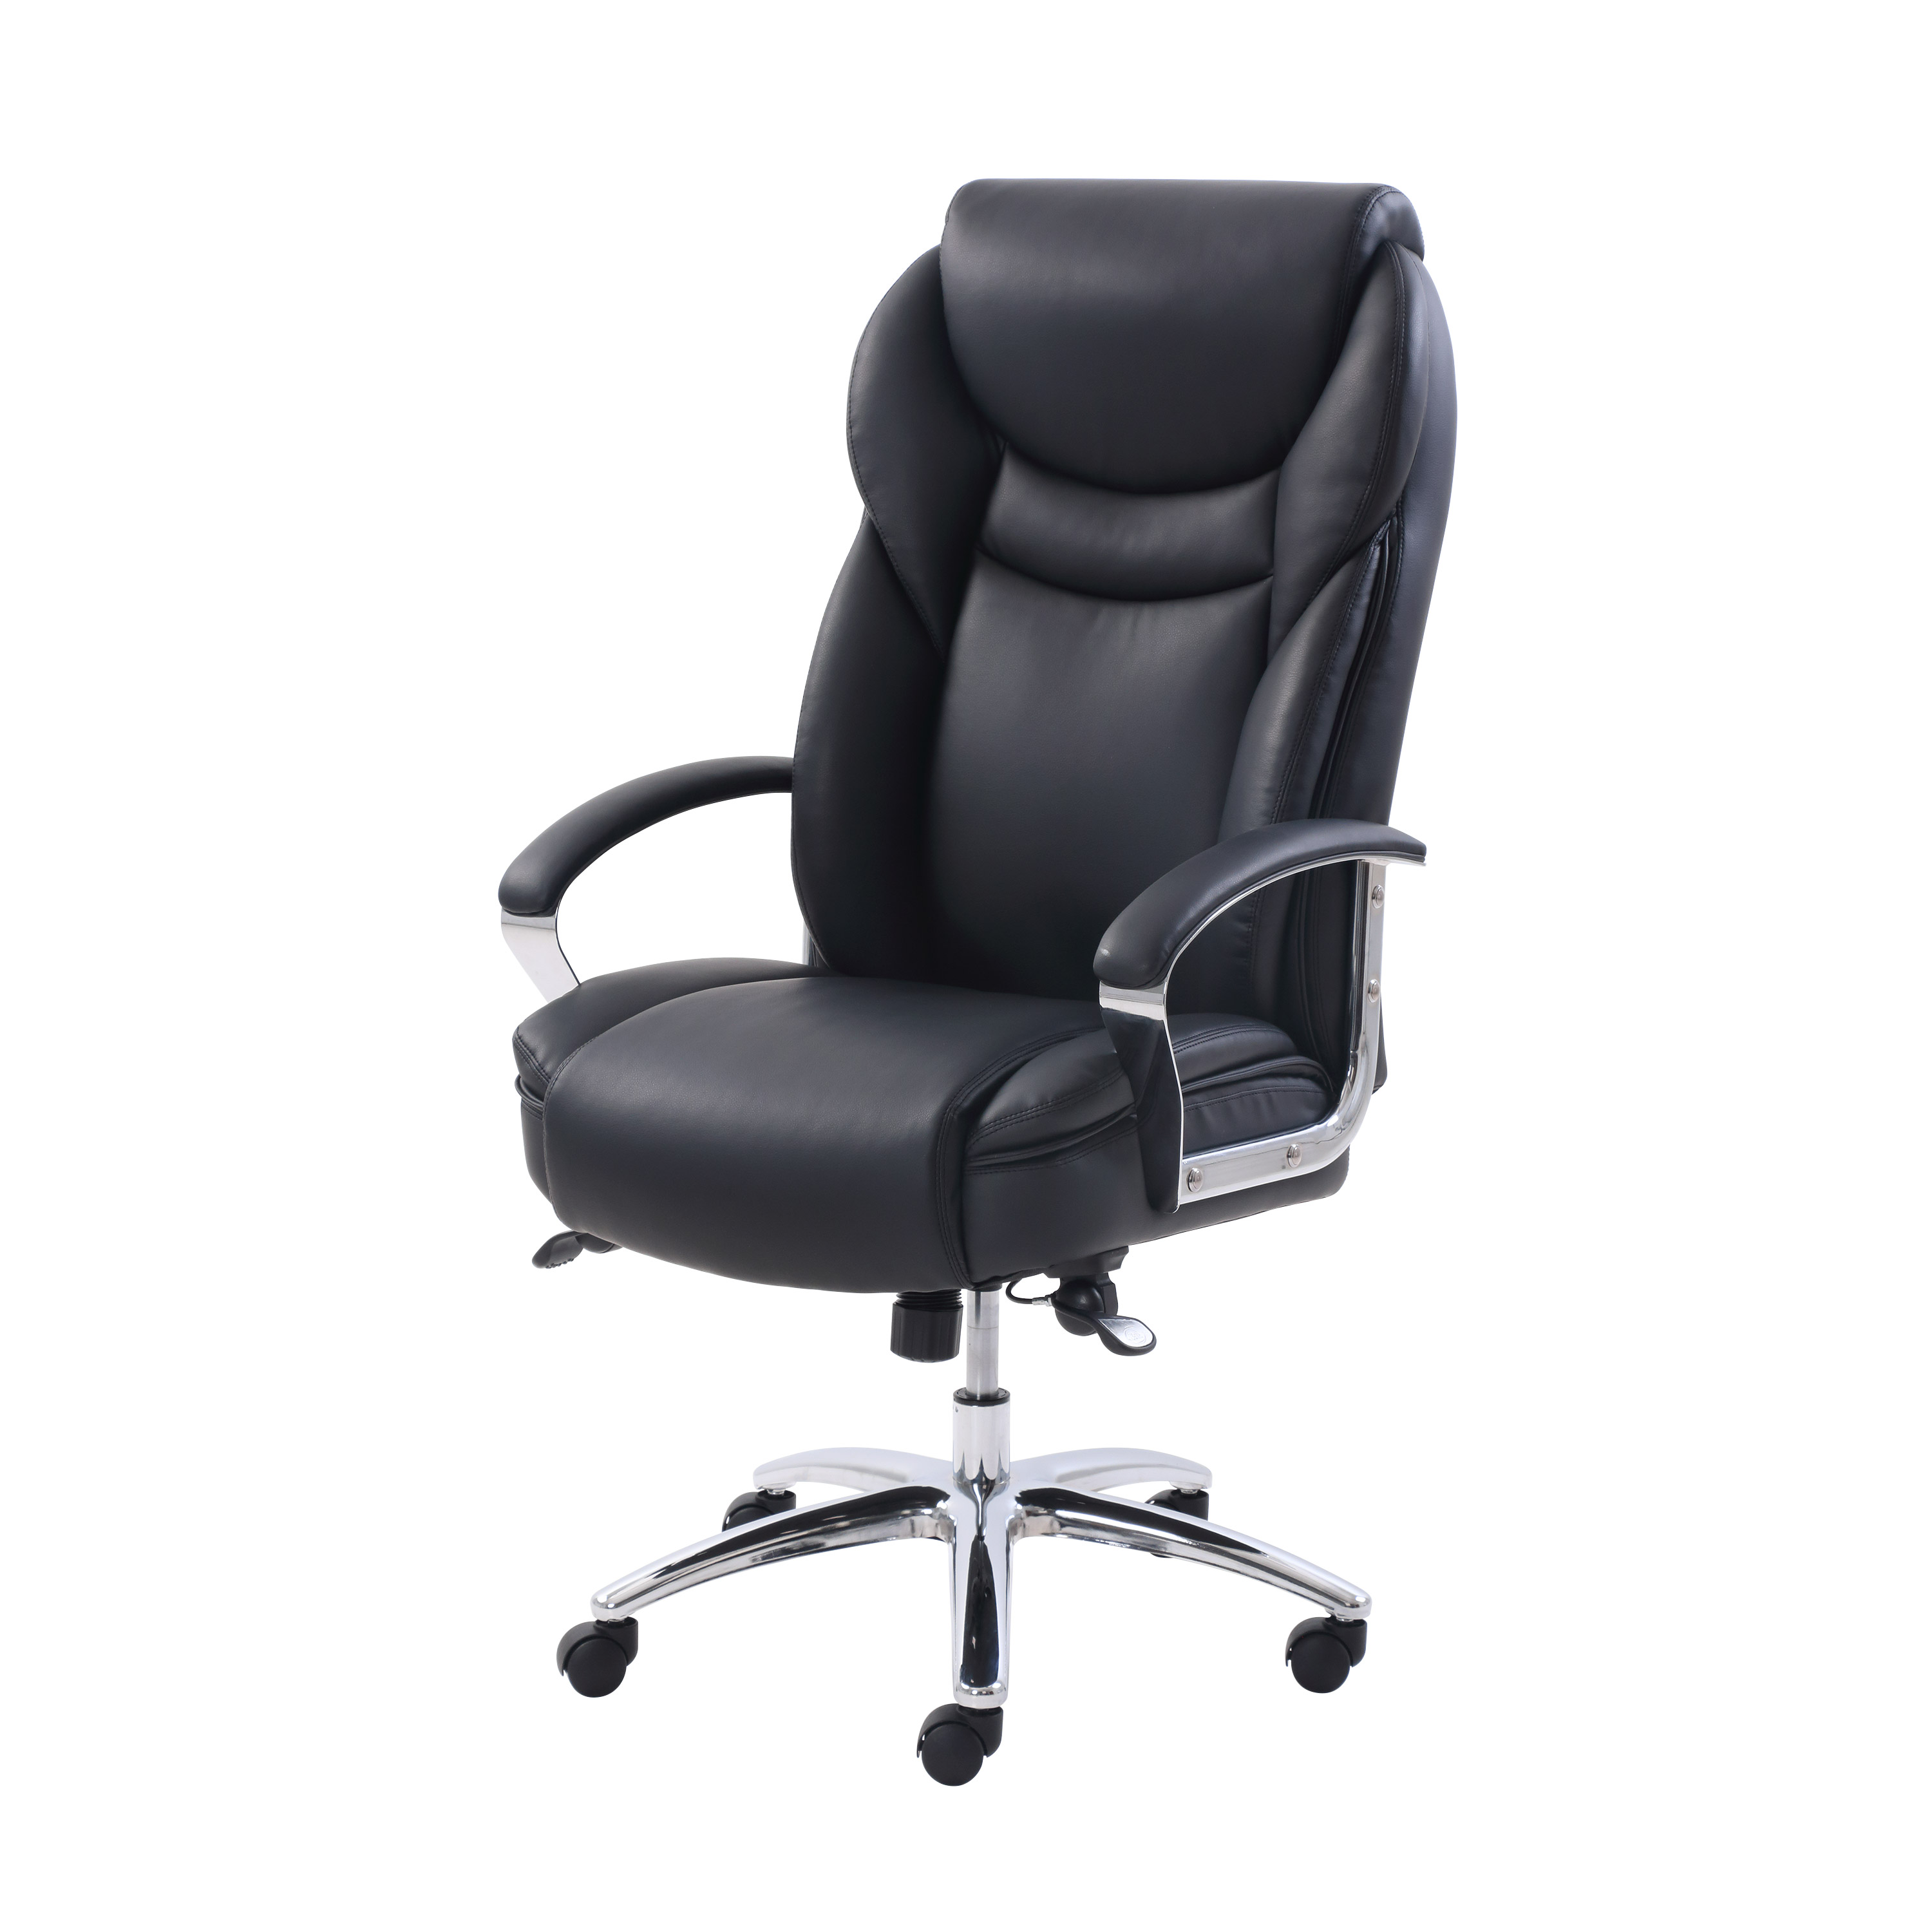 Buy Serta Big Tall Office Chair With Memory Foam